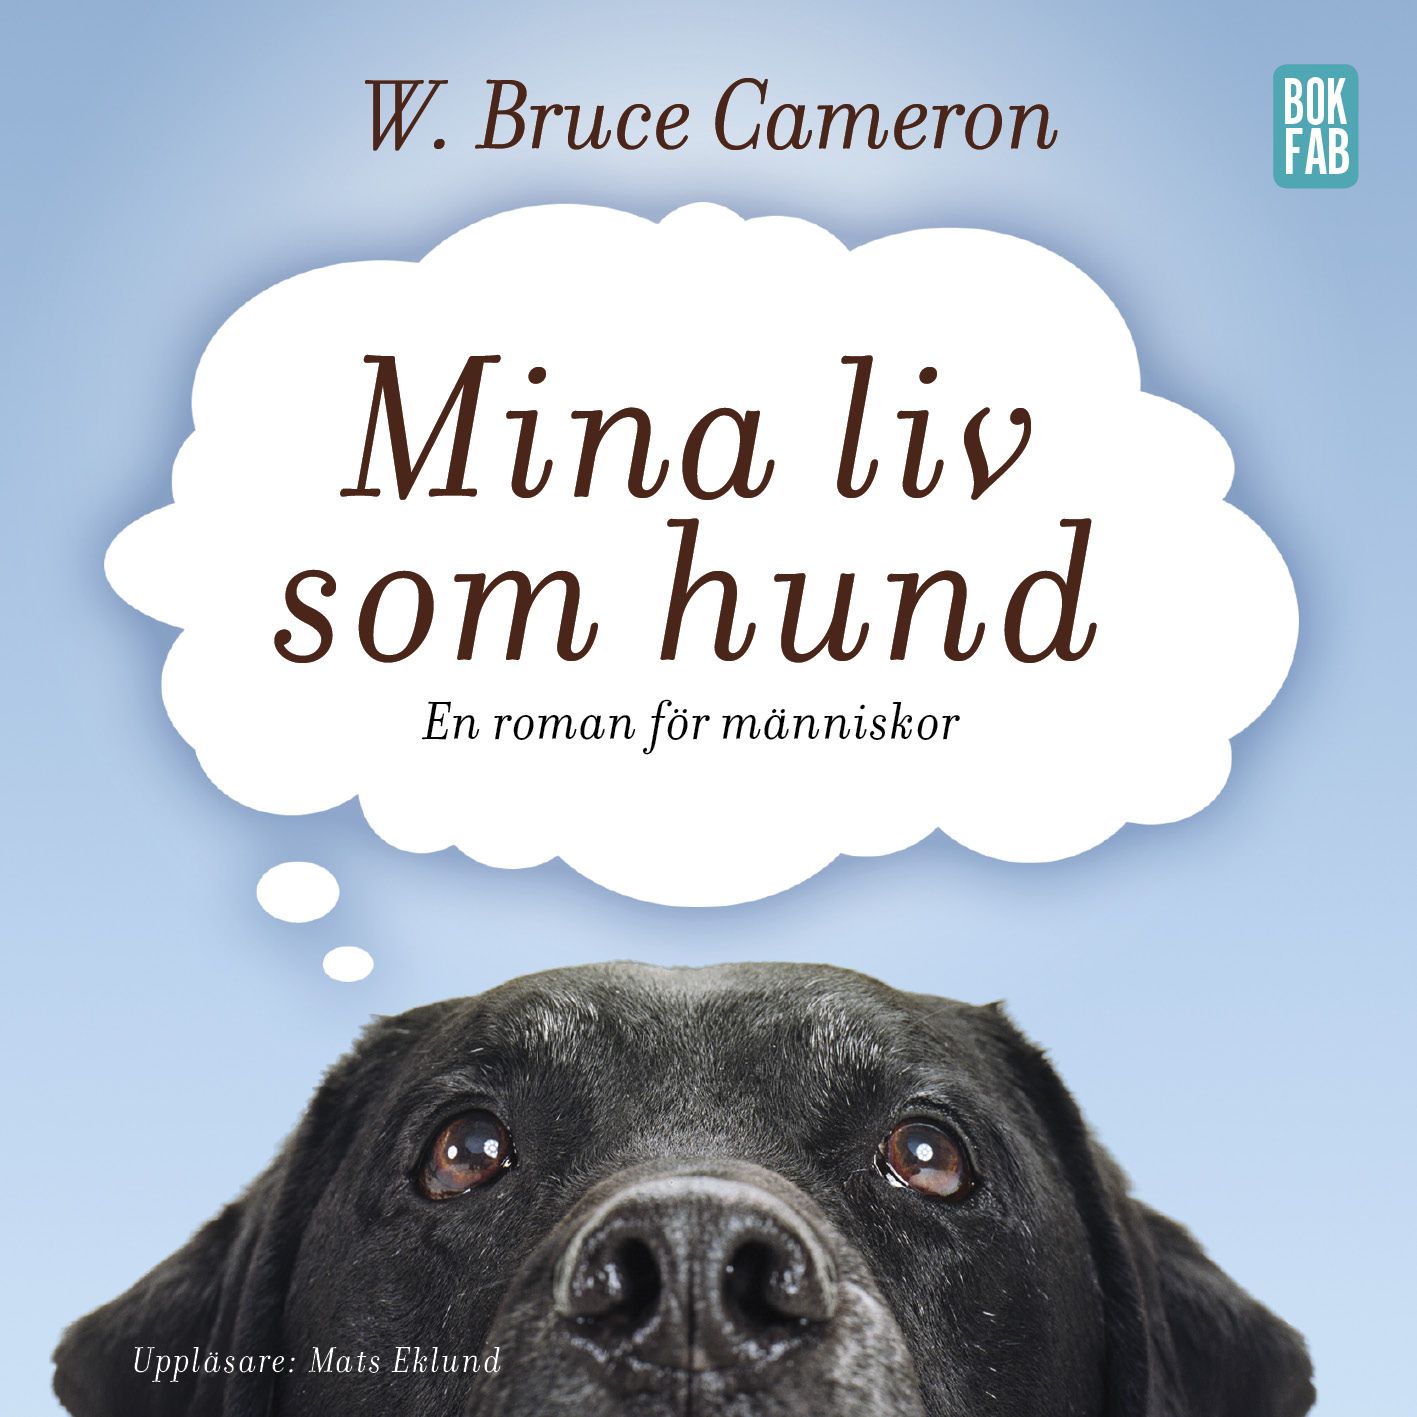 Mina liv som hund, ljudbok av W. Bruce Cameron